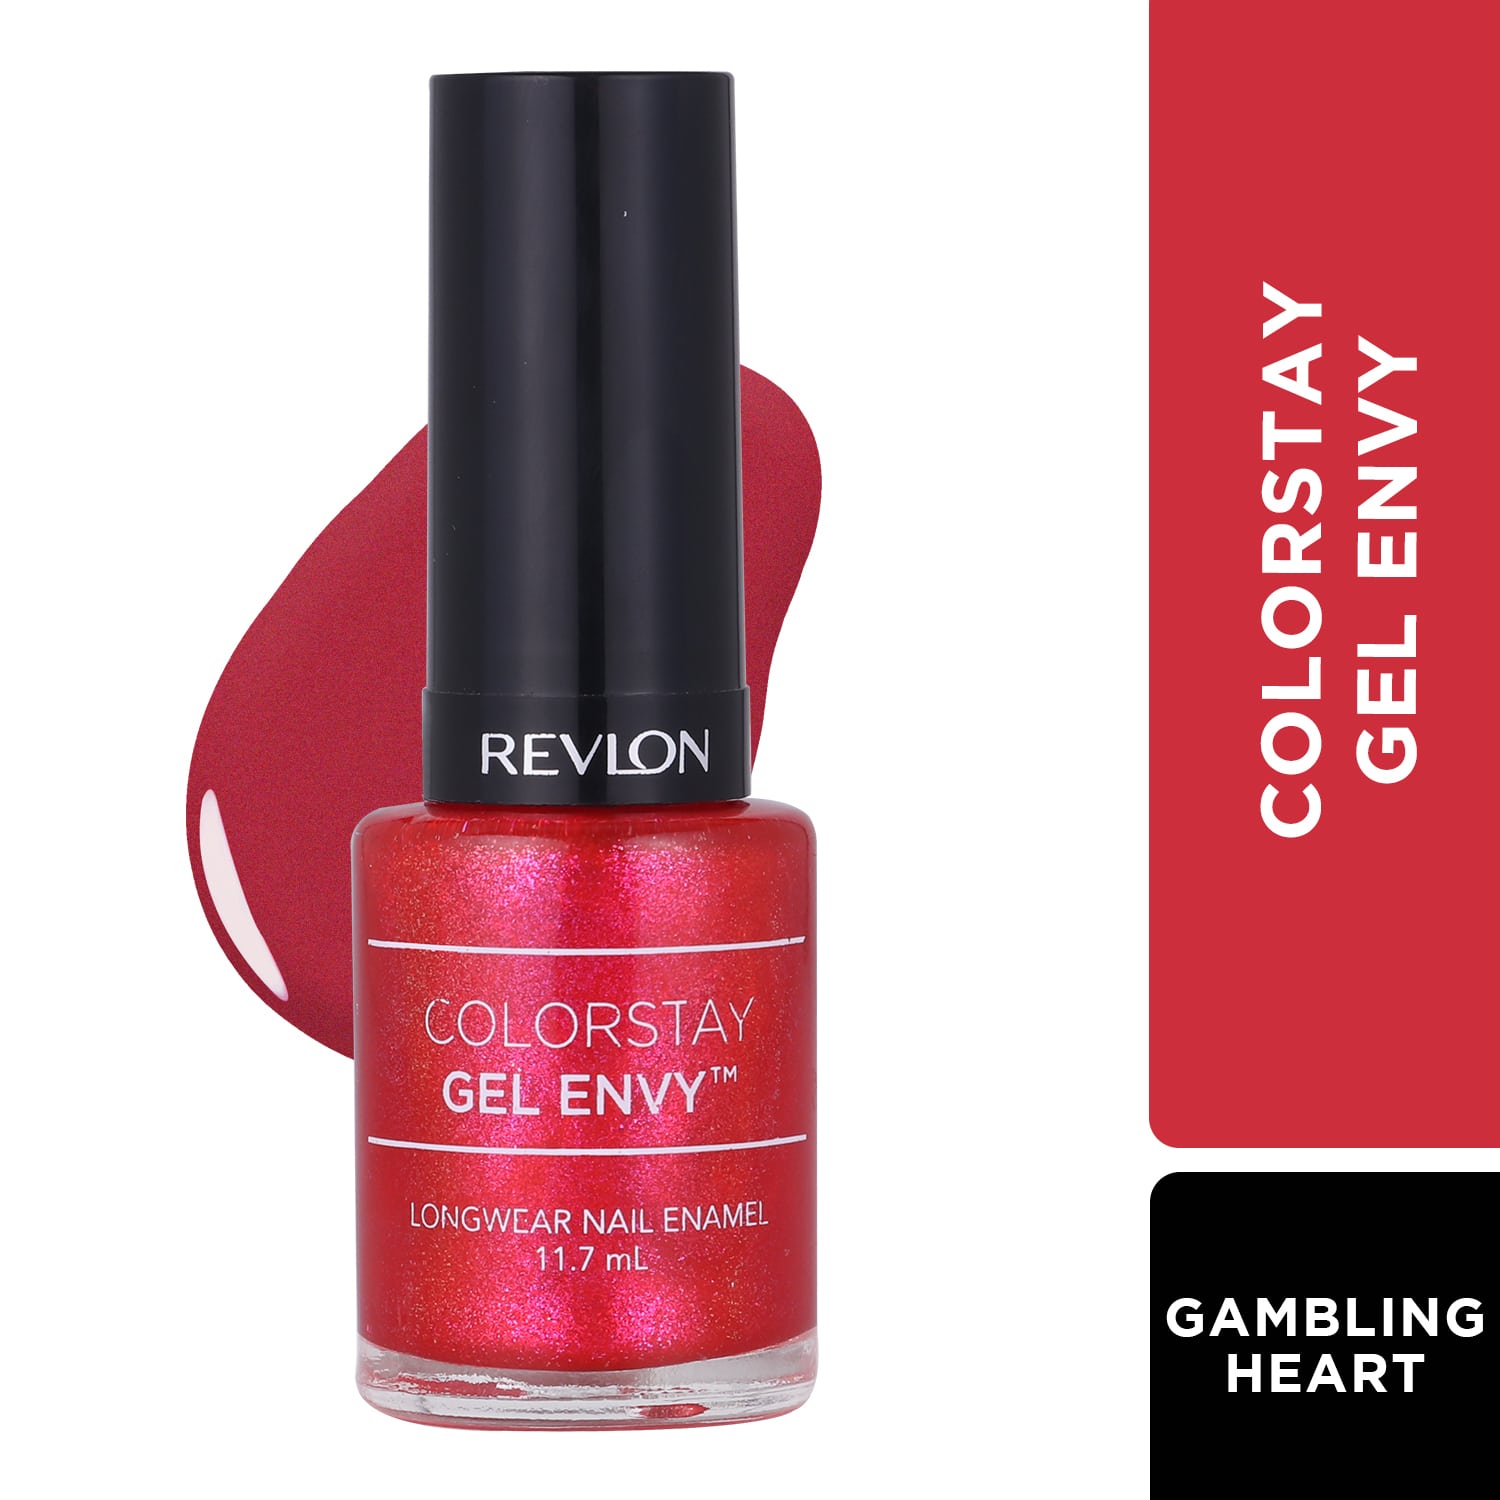 Revlon Colorstay Gel Envy Longwear Nail Polish - Perfect Pair - Walmart.com